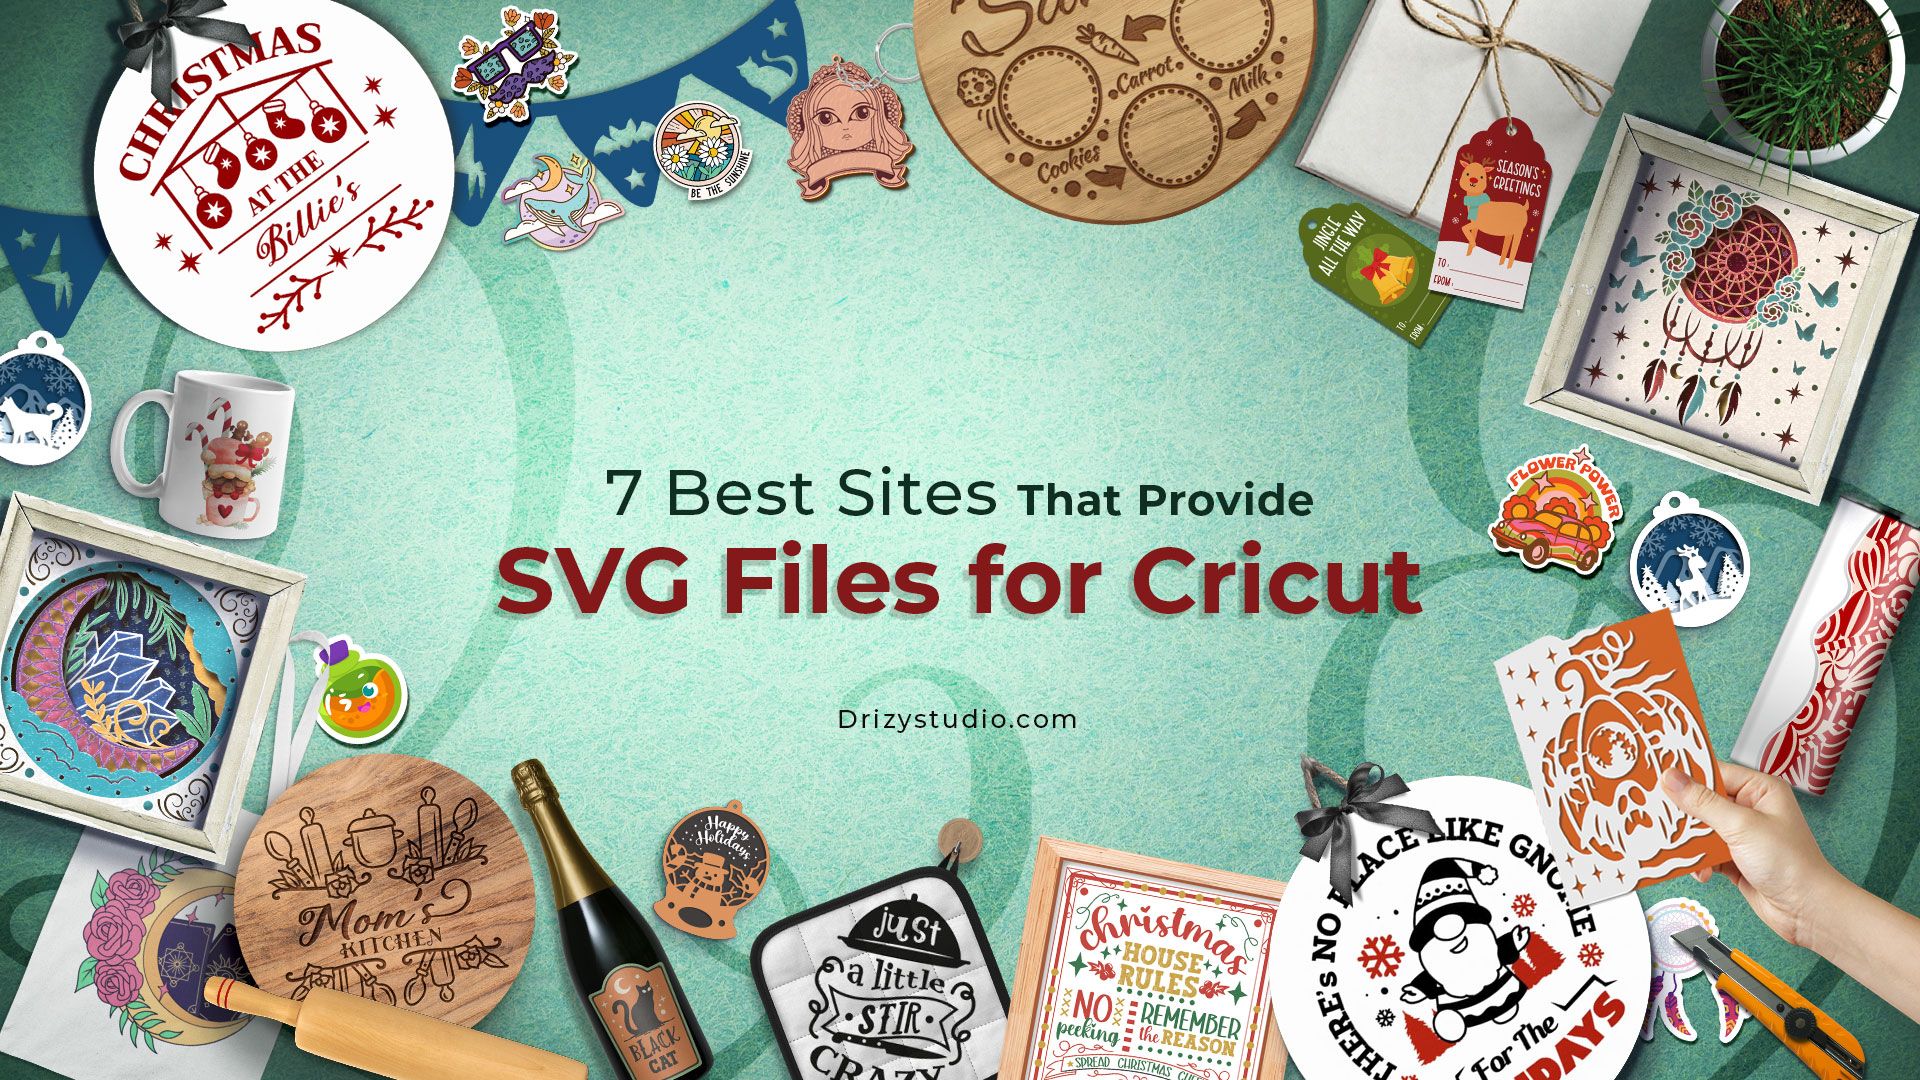 7 Best Sites That Provide SVG Files for Cricut